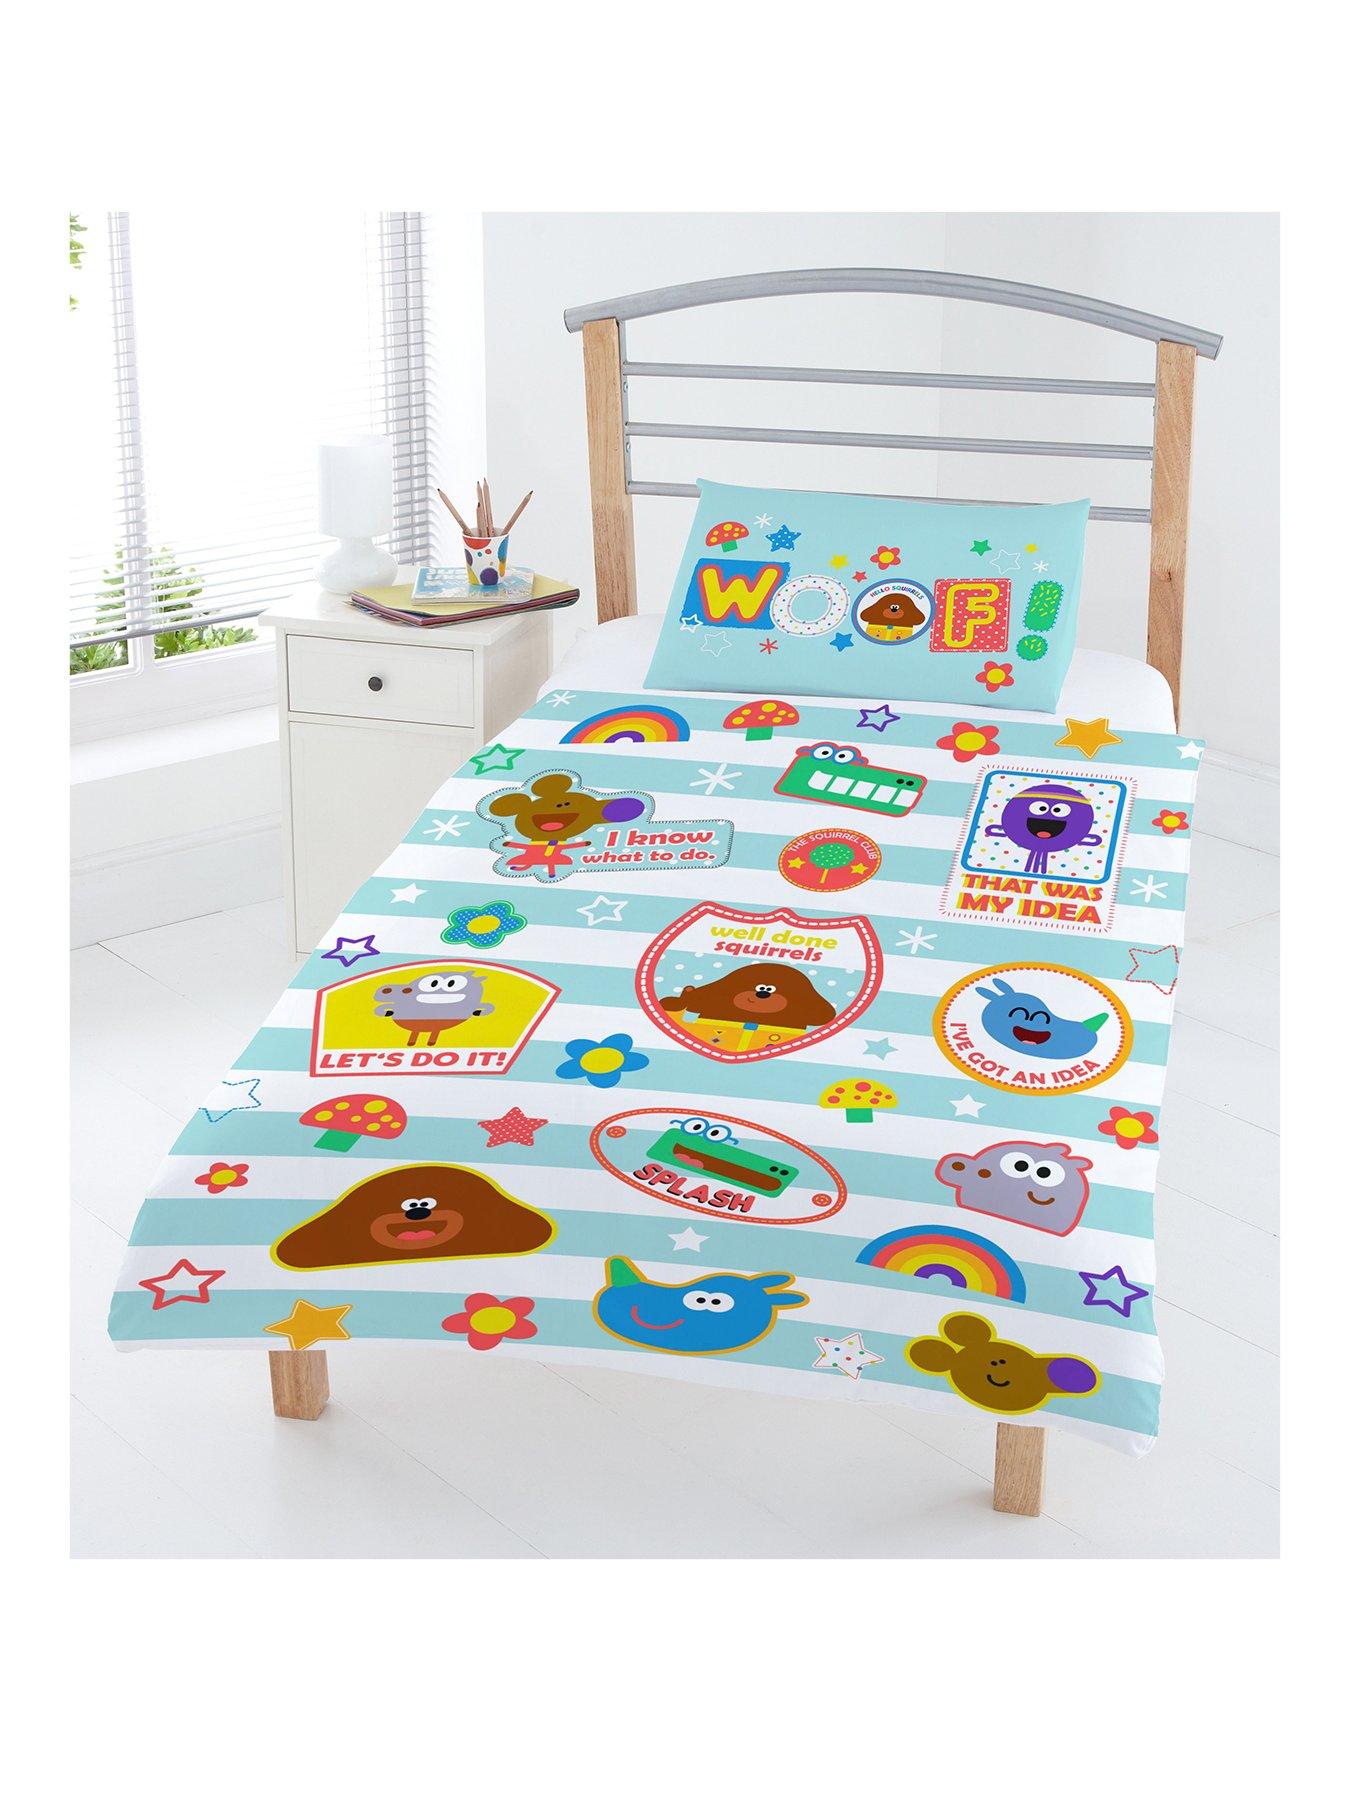 Mint Baby Products Junior Joy Cot Bed Duvet Cover Nursery Nursery